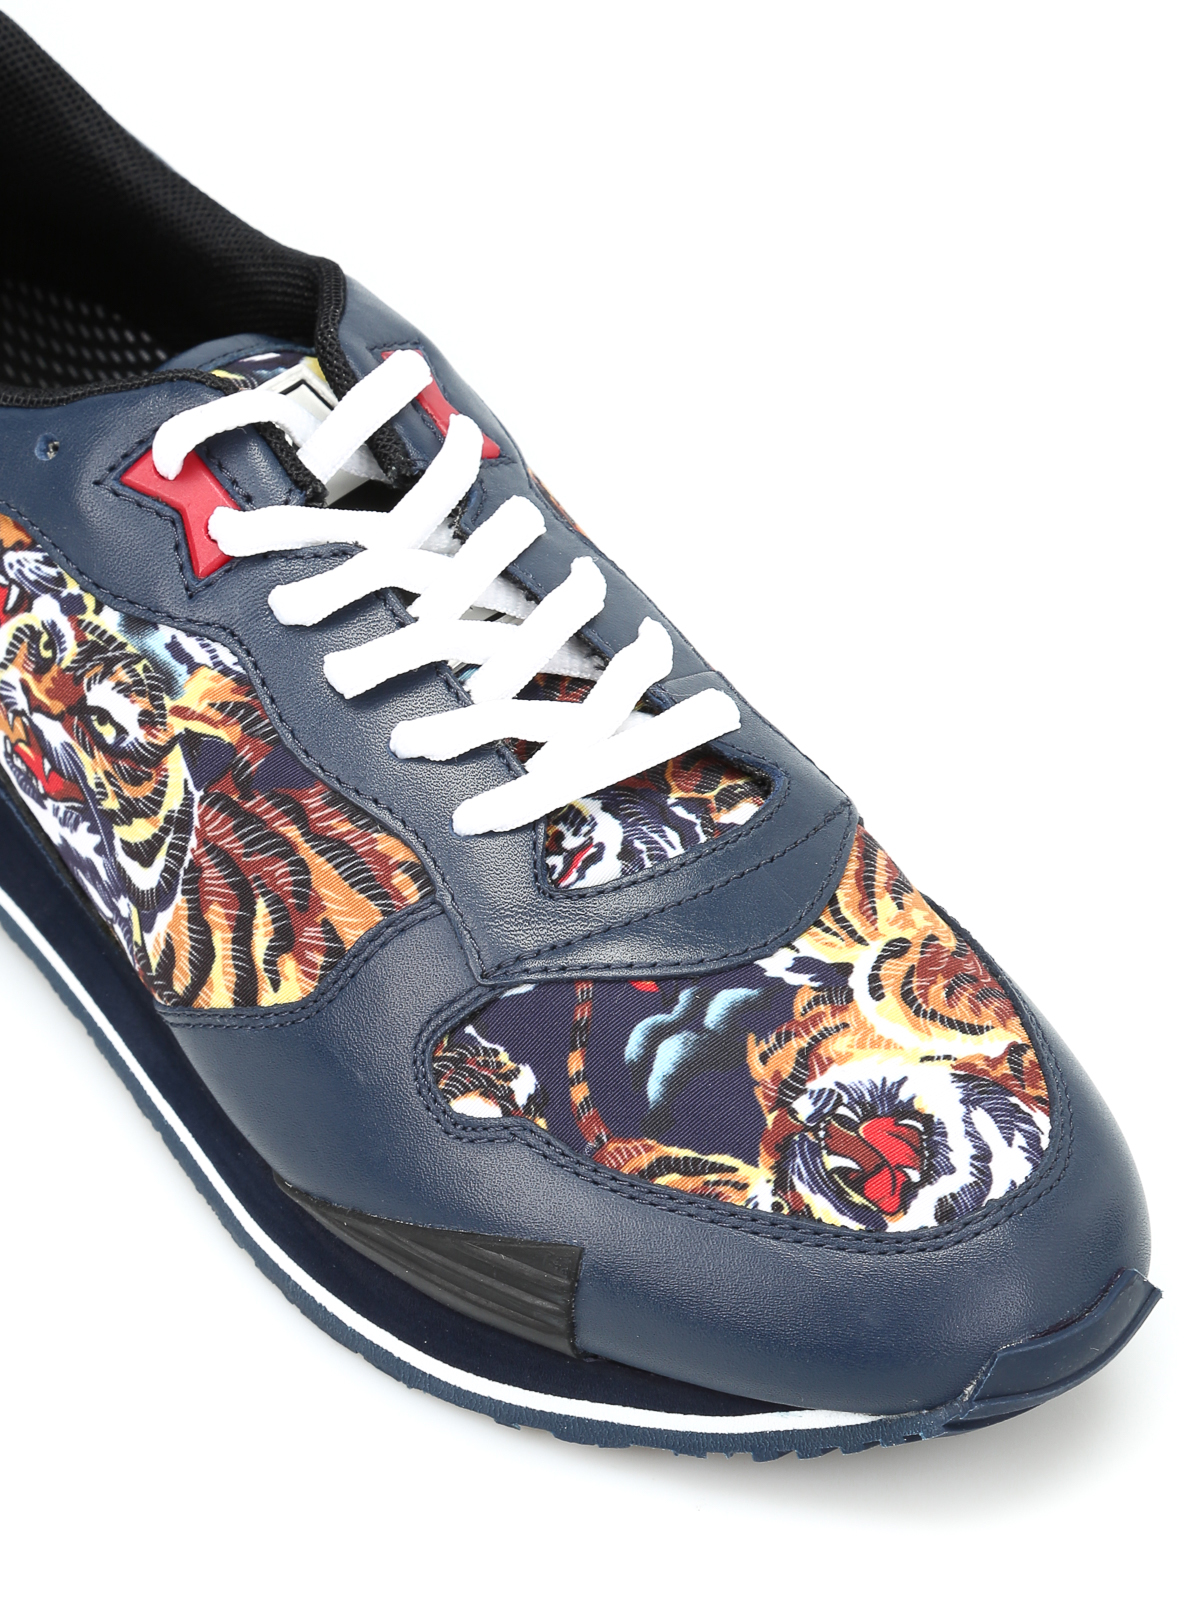 kenzo tiger sneakers